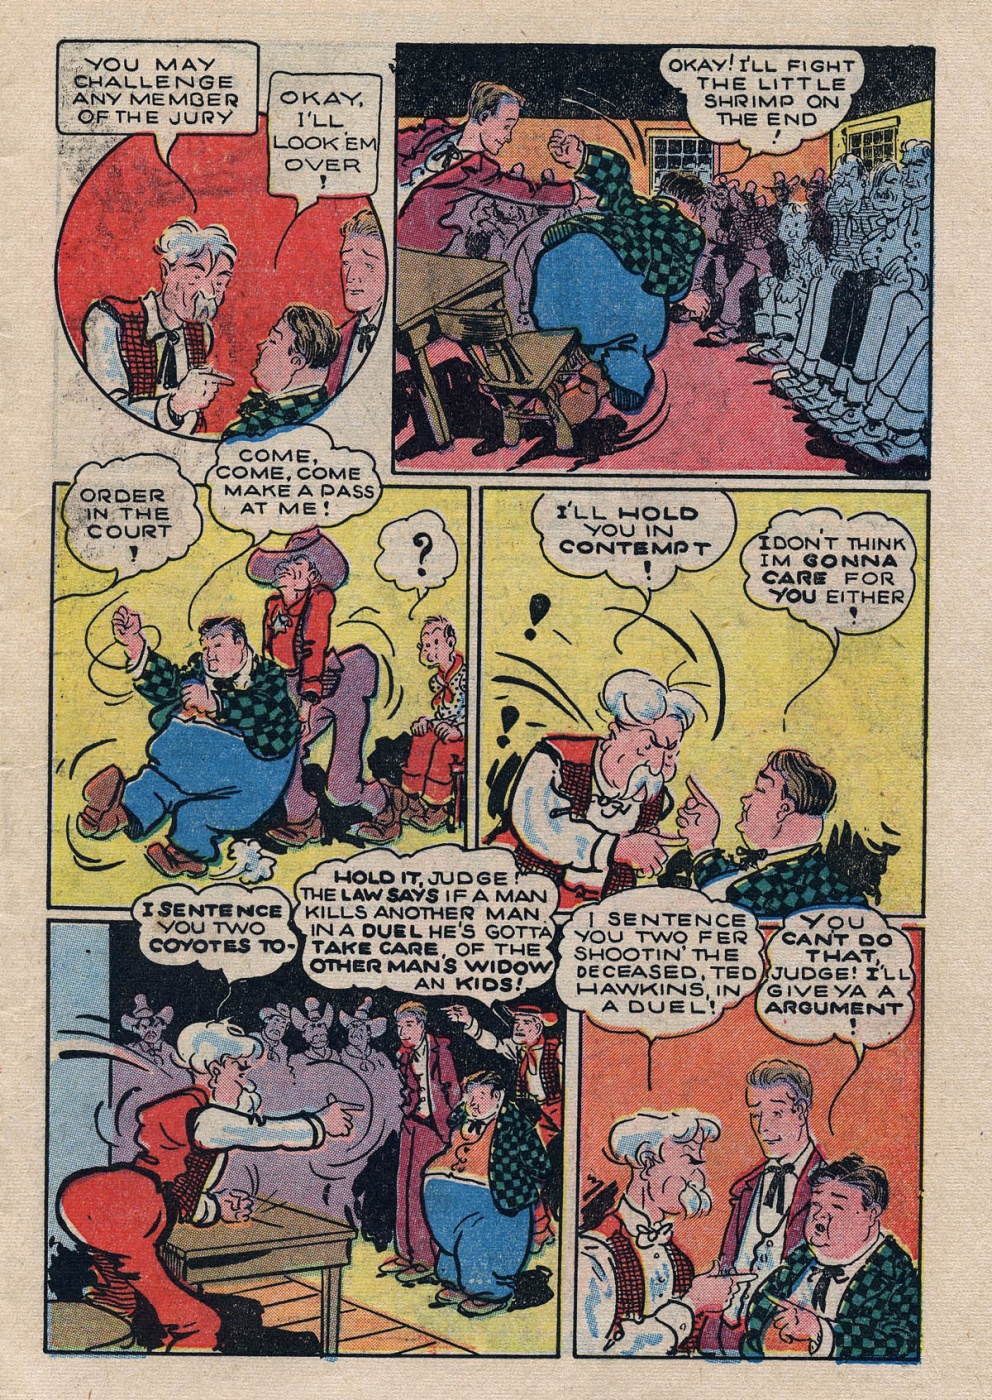 Funny Comic Strips - Abbott and Costello 001 (Feb 1948) 9